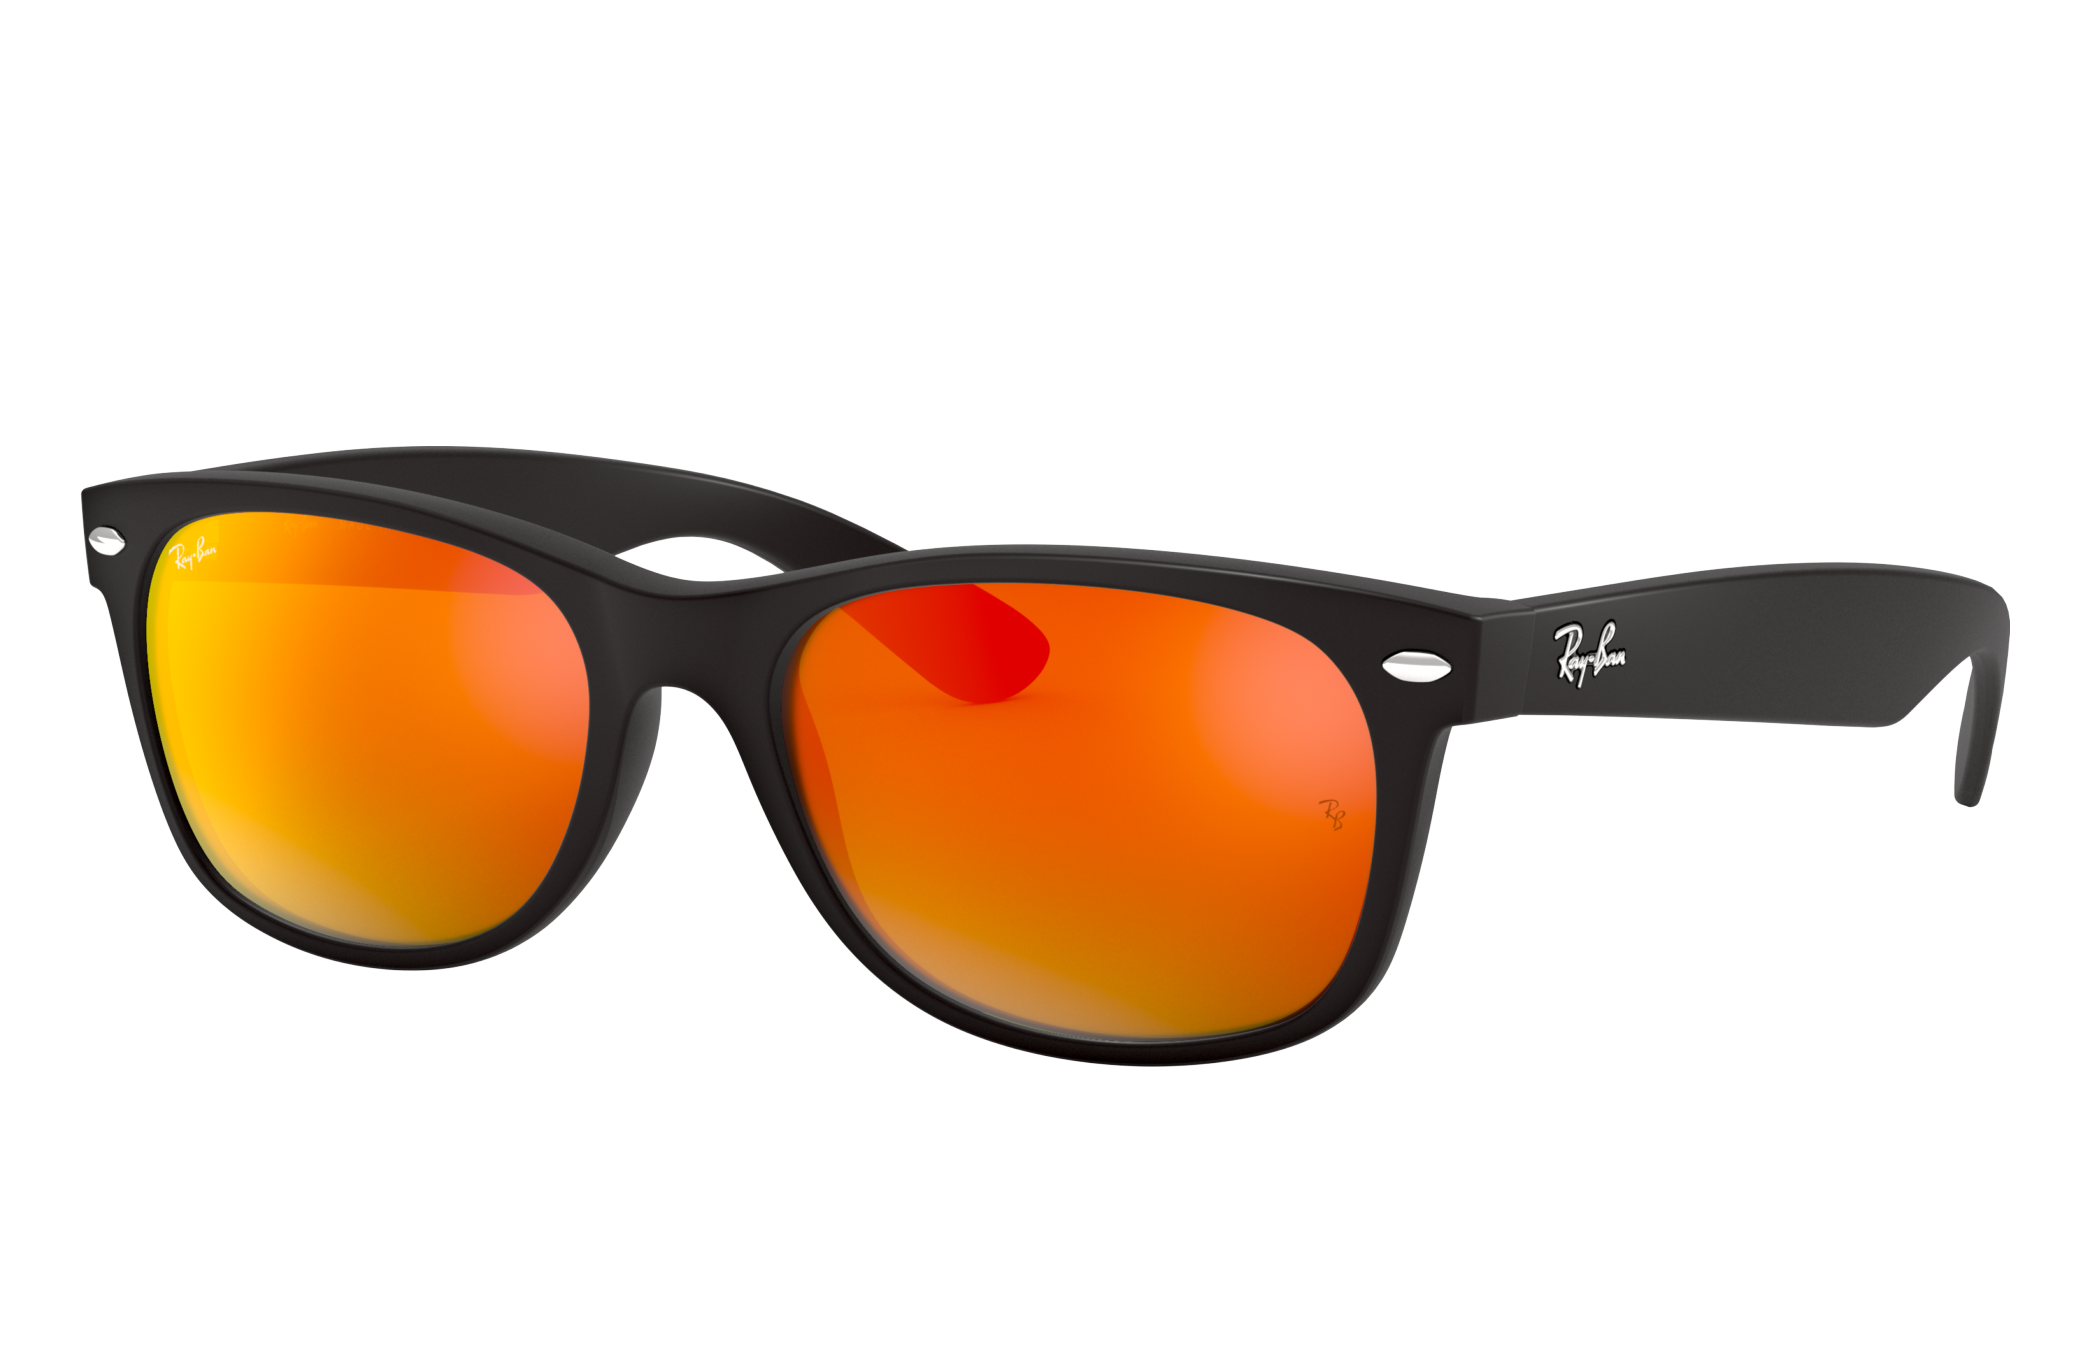 New Wayfarer Flash Sunglasses in Black and Orange | Ray-Ban®